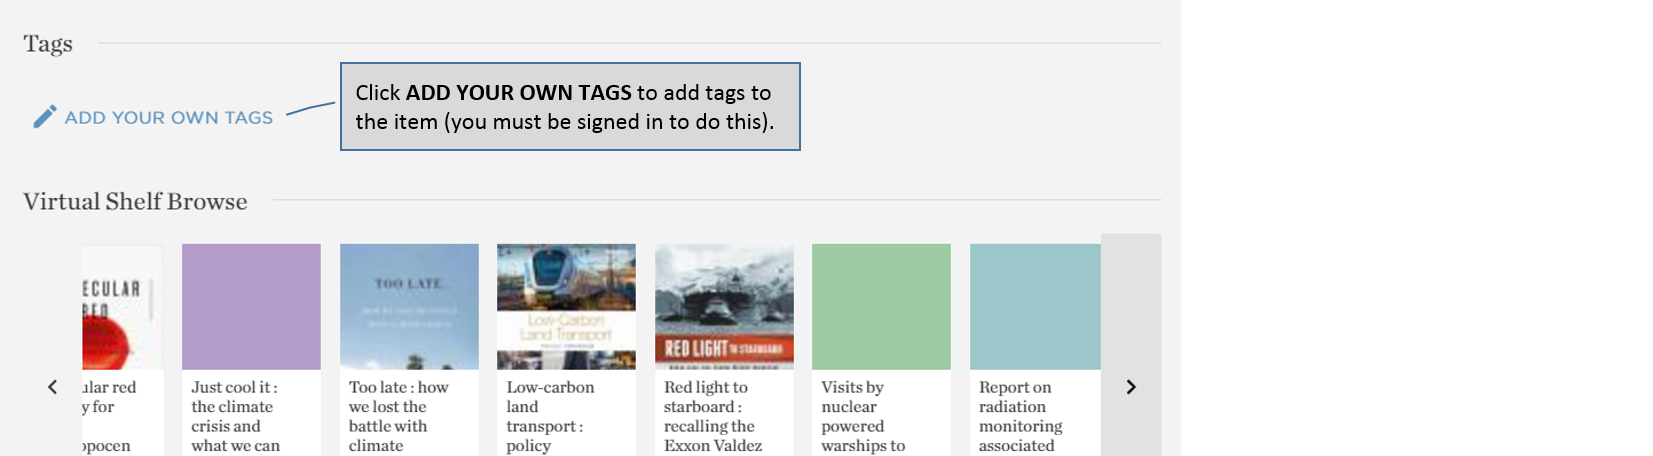 Catalogue – adding User Tags